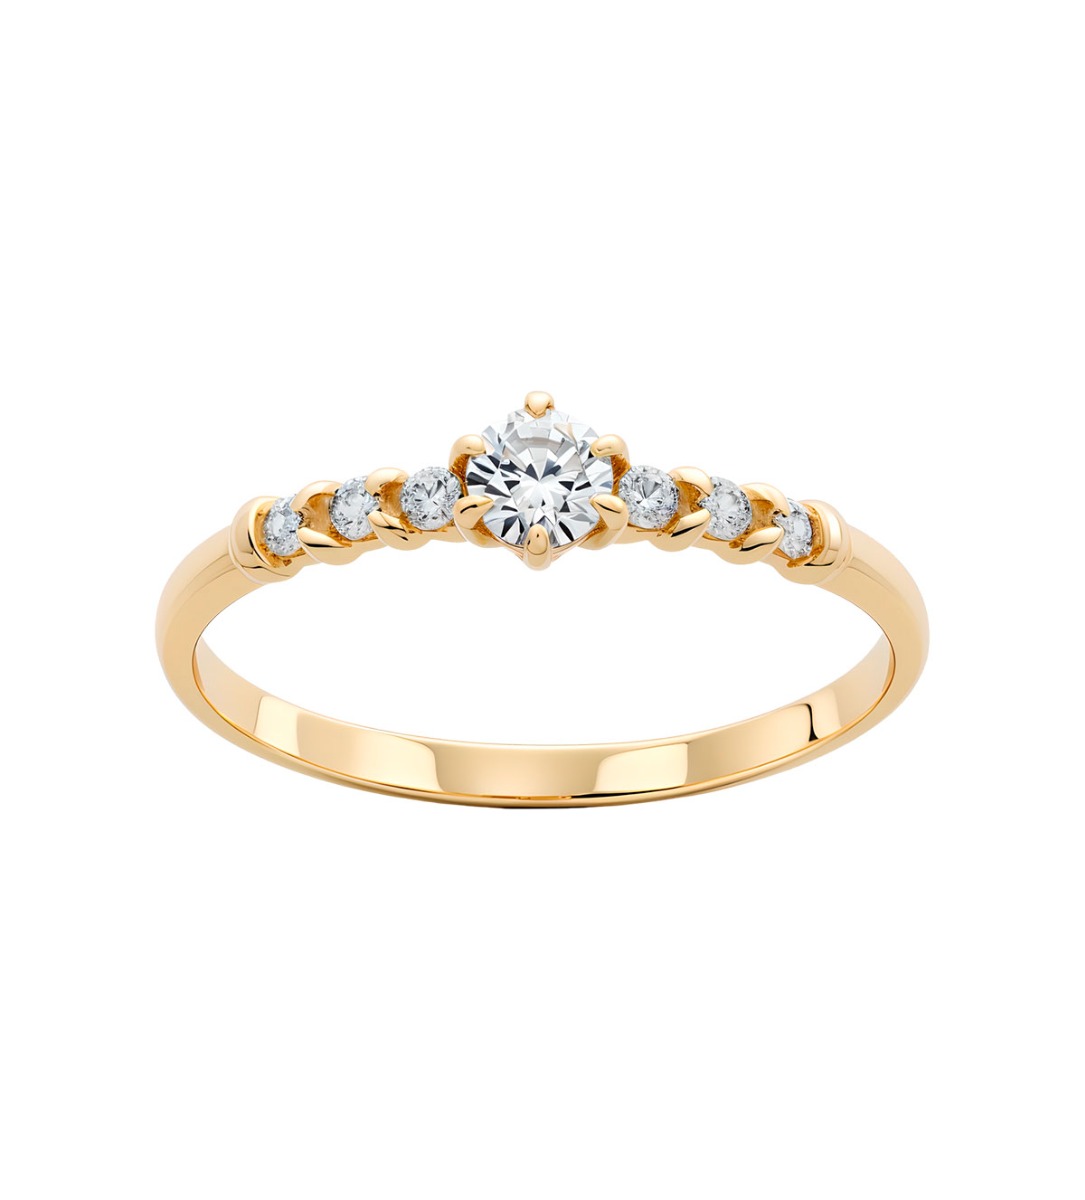 anillo oro amarillo 18 ktes con brillantes fotografia principal para web el rubi